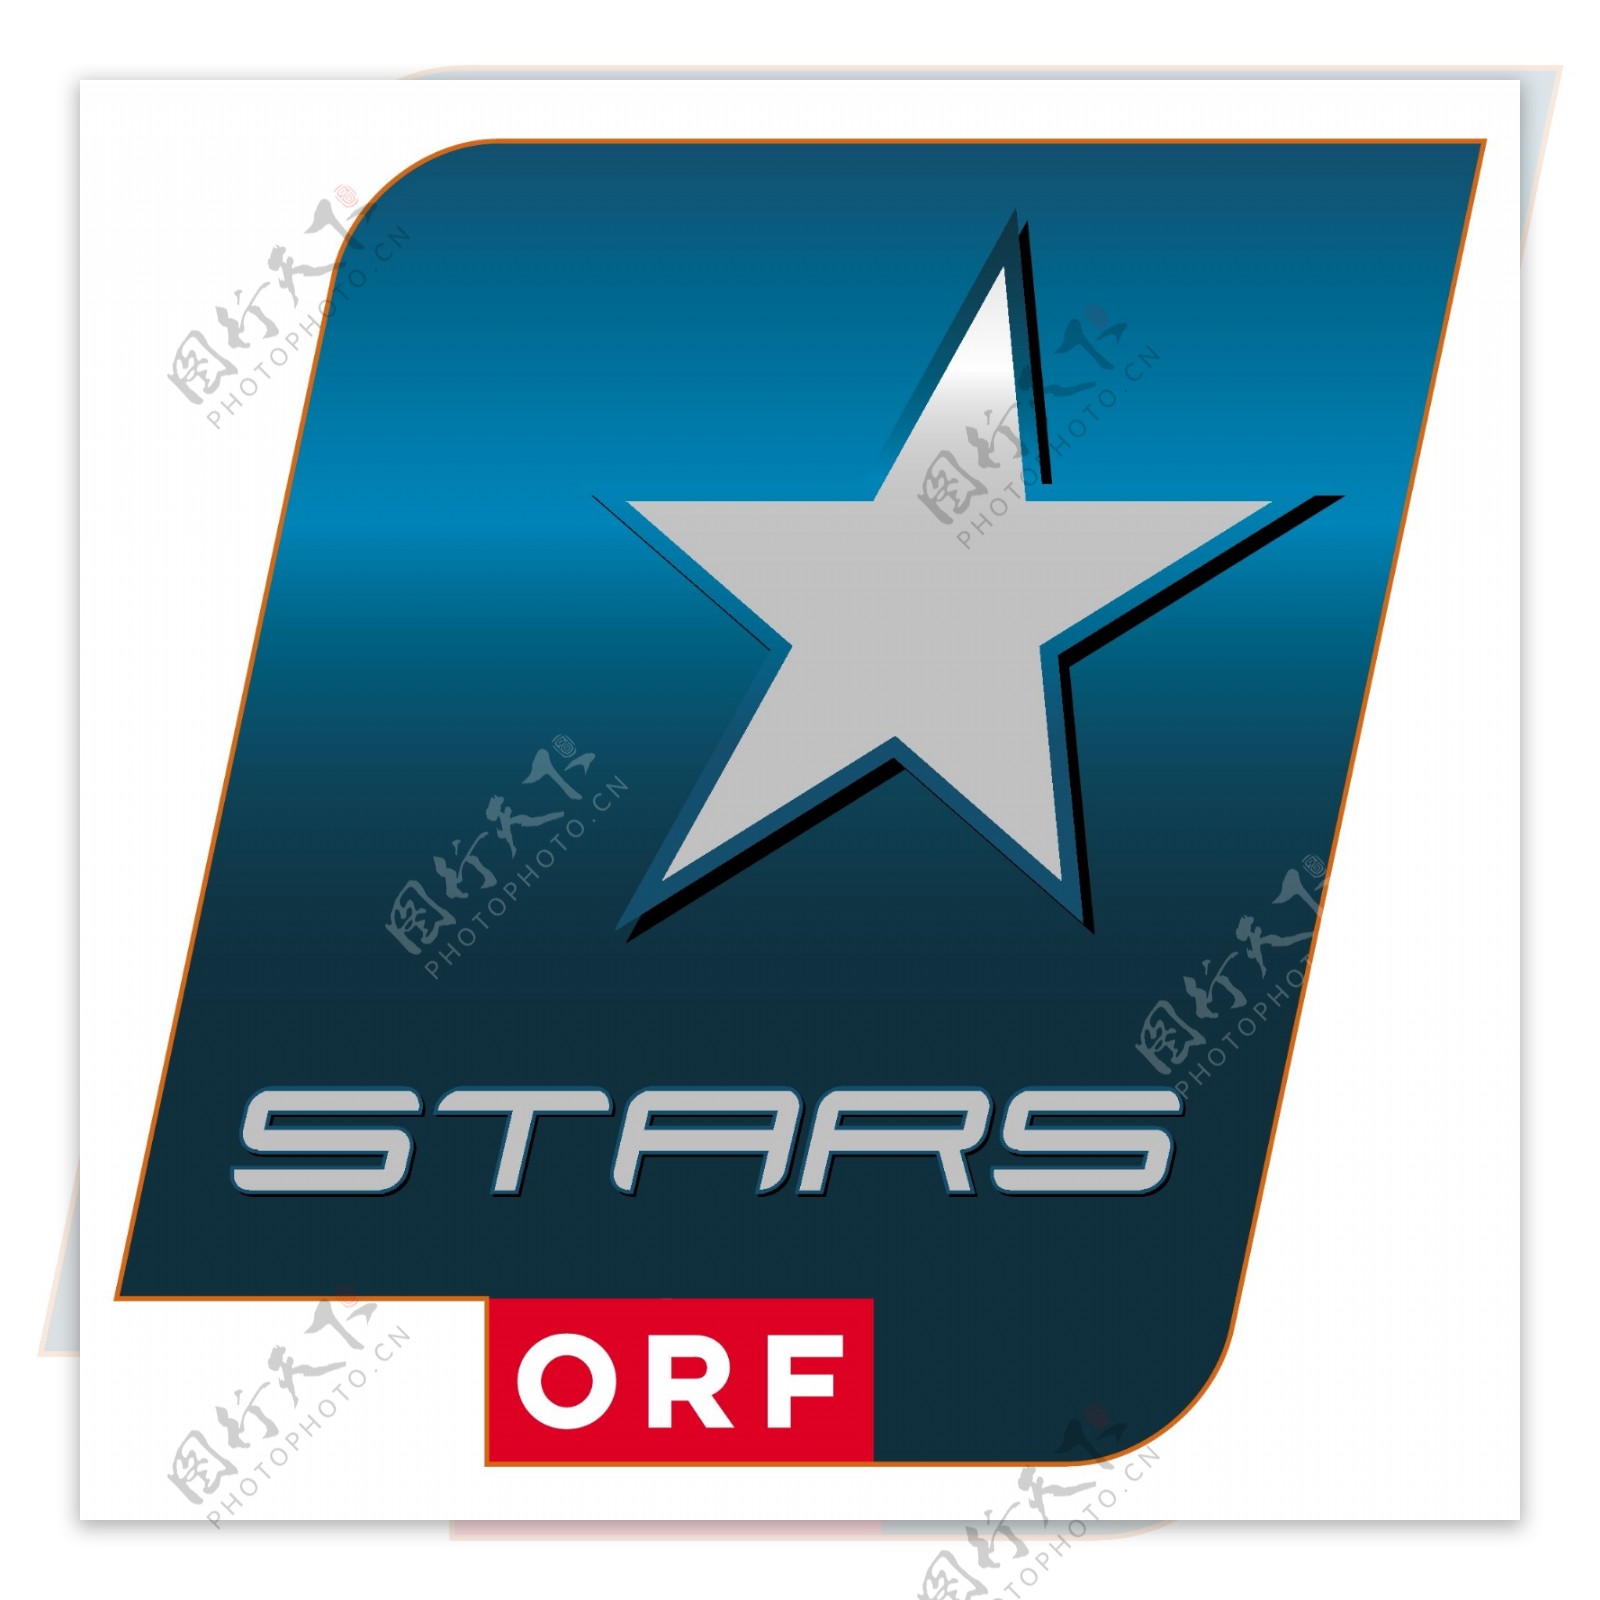 ORFSportlogo设计欣赏ORFSport传媒LOGO下载标志设计欣赏